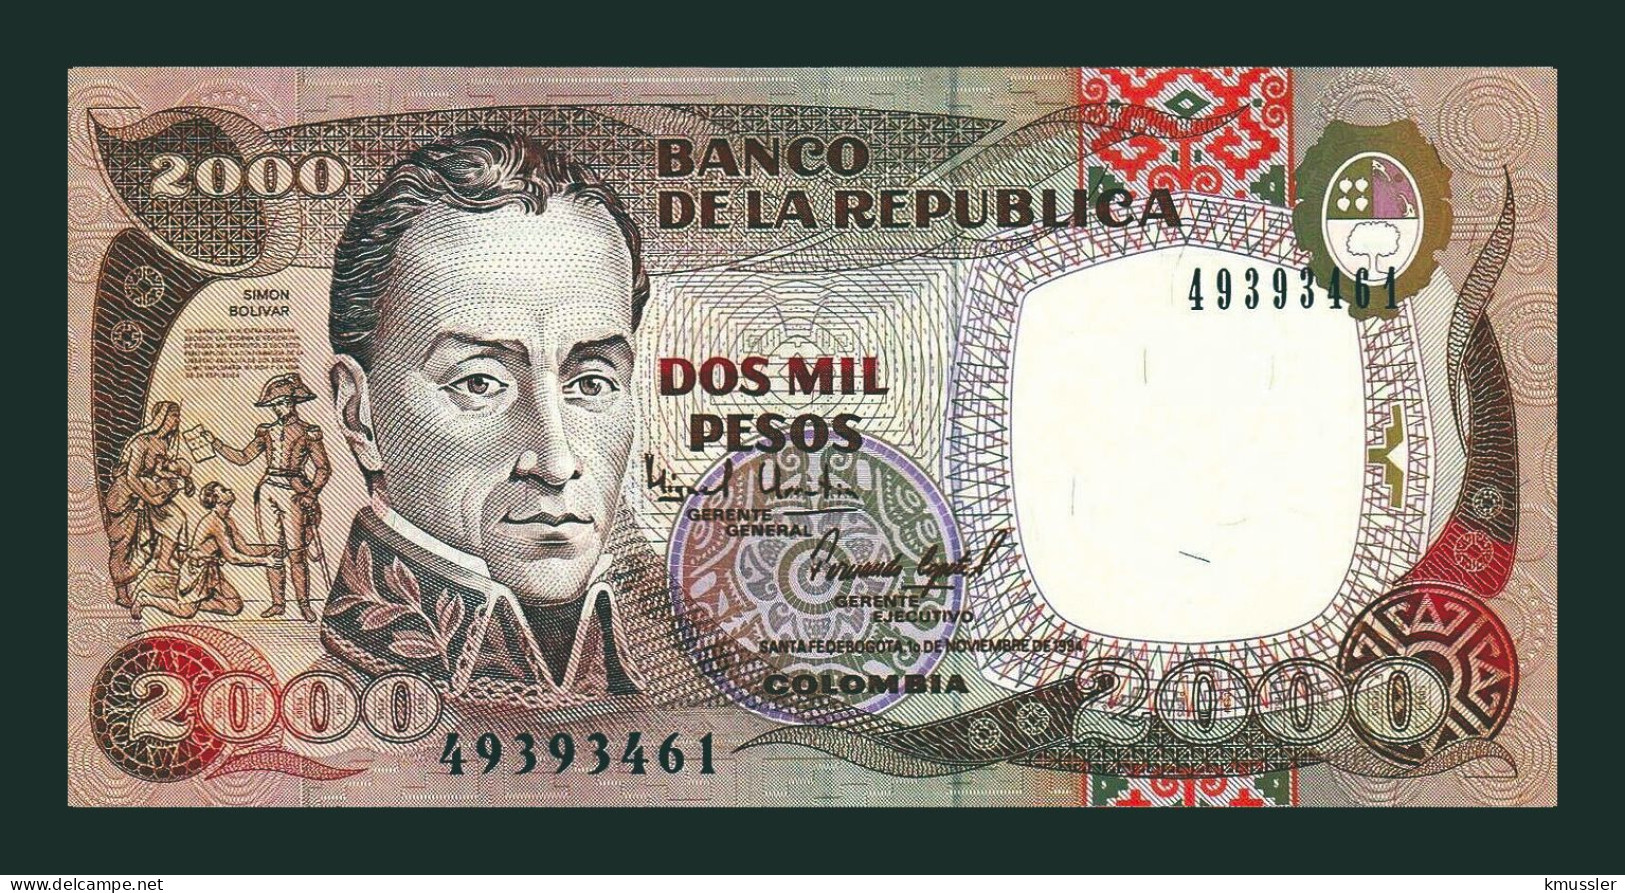 # # # Banknote Kolumbien (Colombia) 2.000 Pesos 1994 (P-439) UNC # # # - Colombia